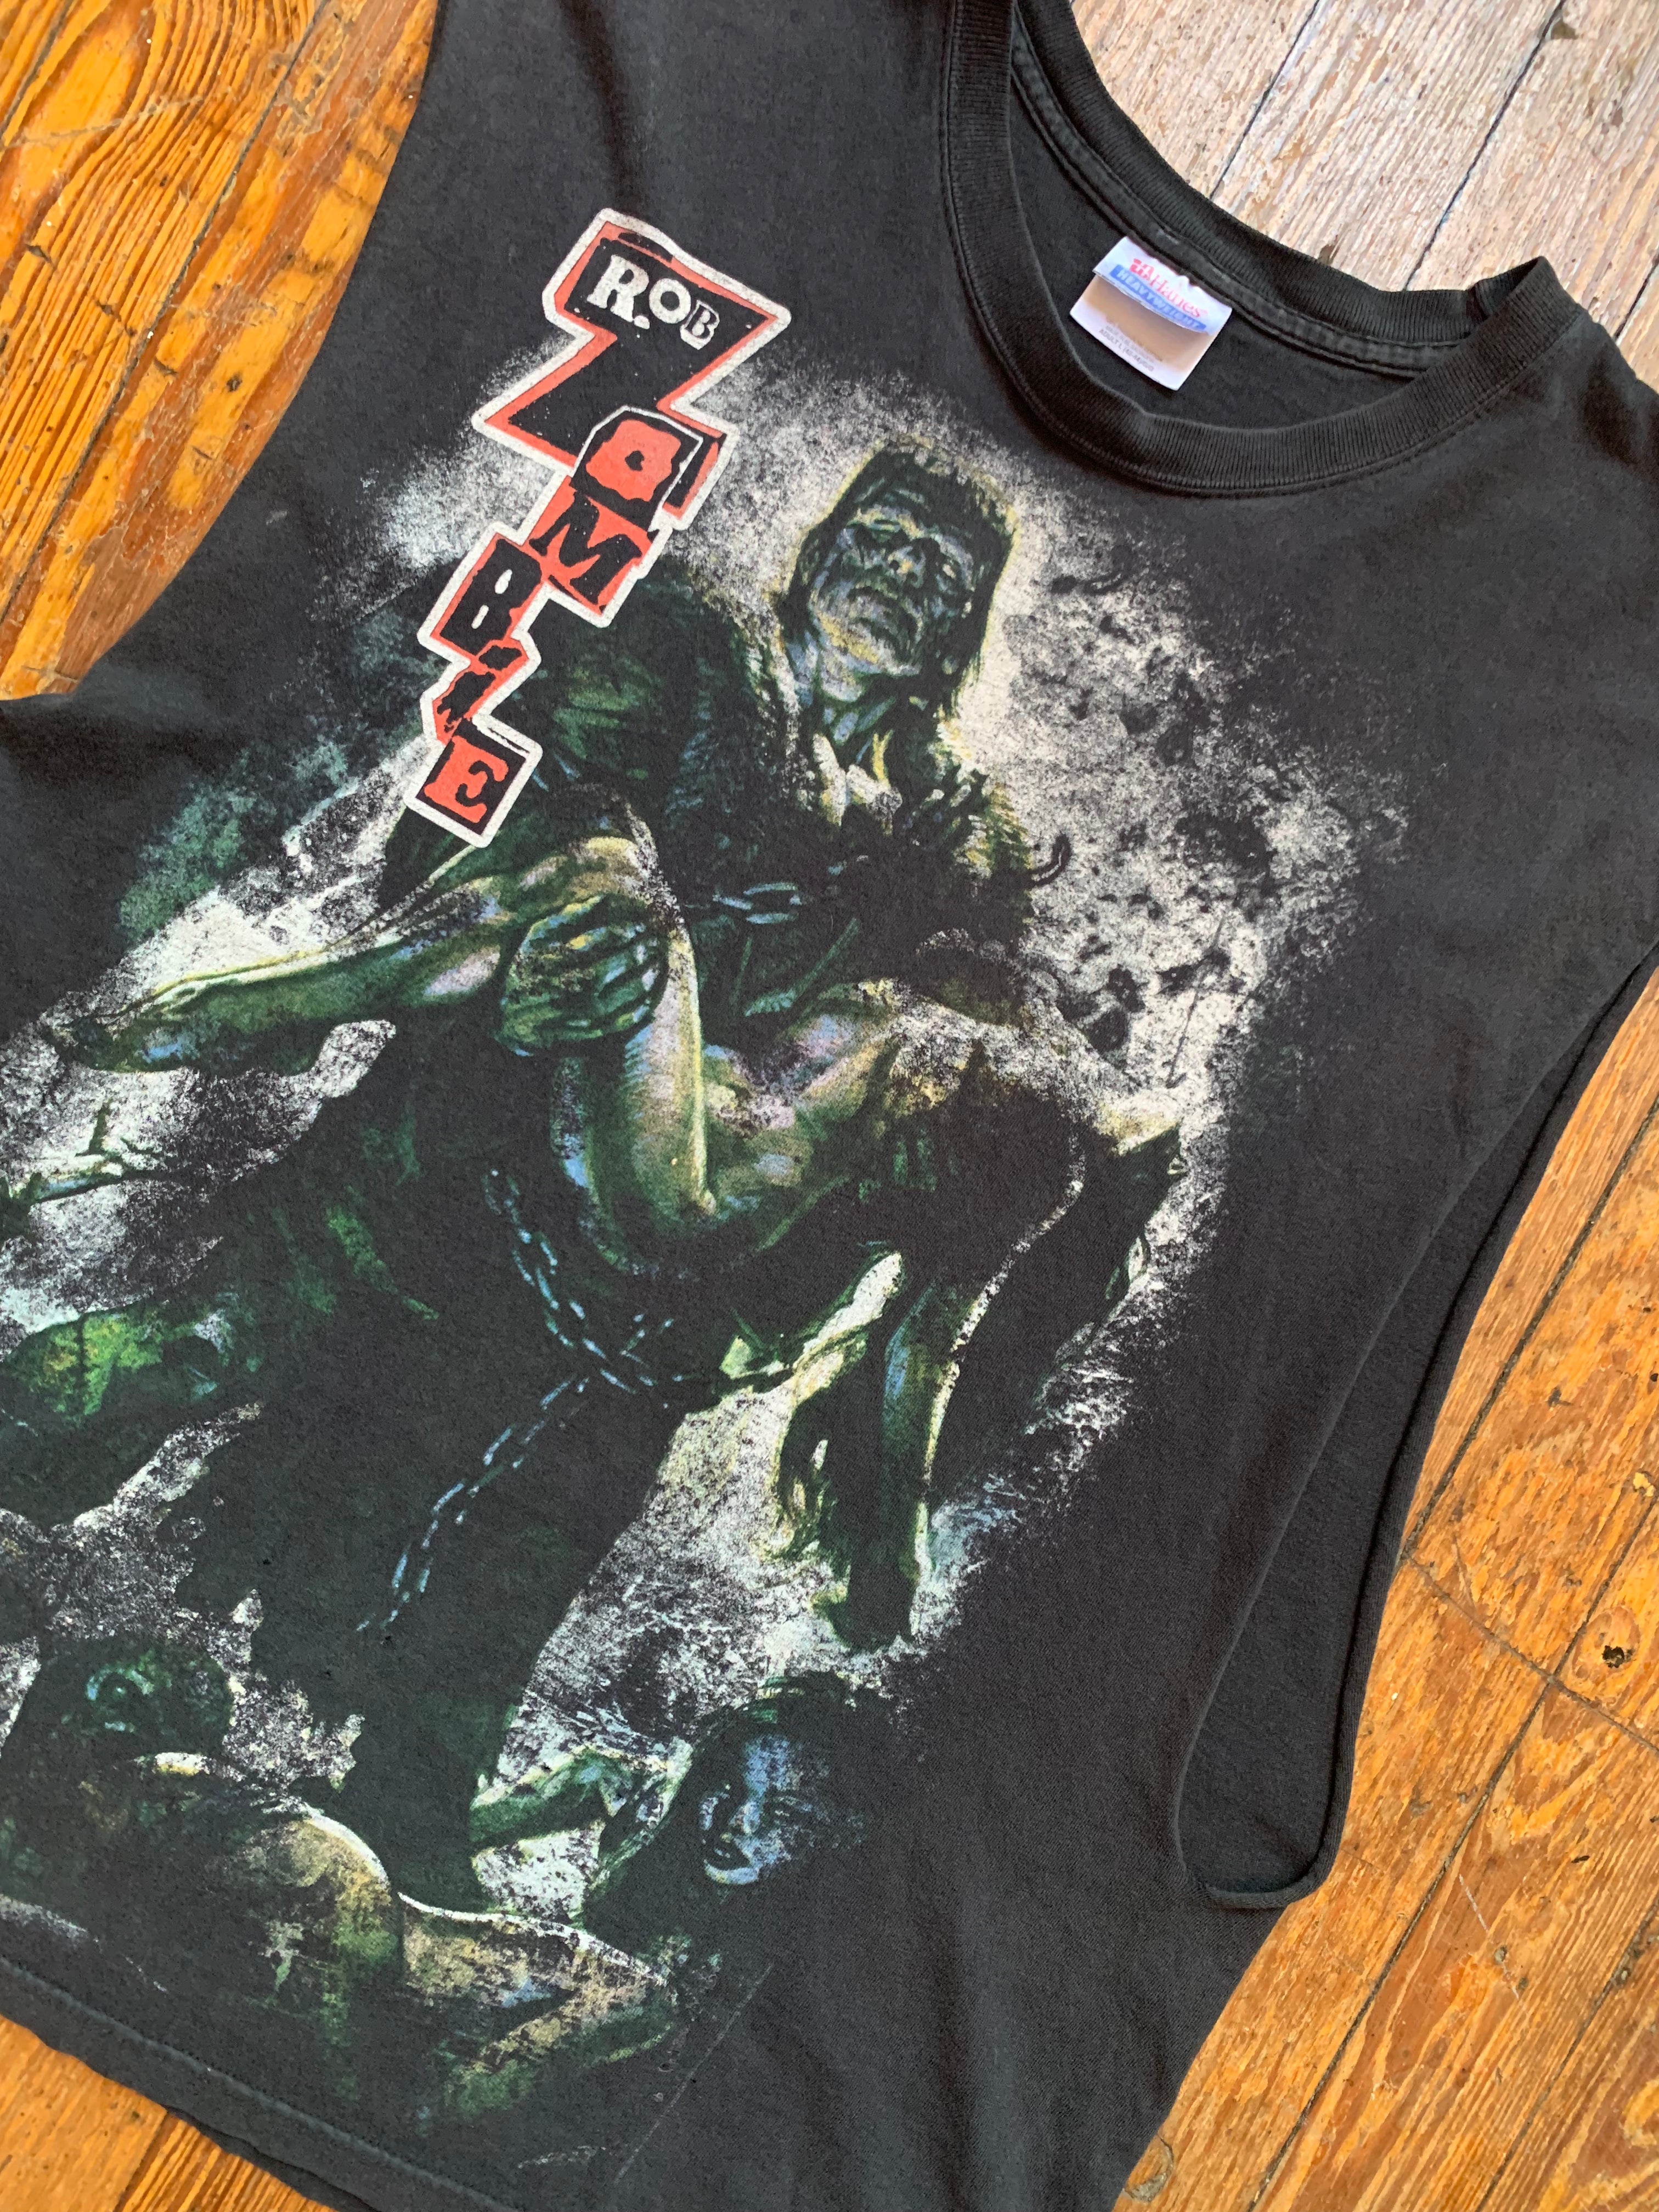 Rob Zombie – Frankenstein Halloween Long Sleeve T-Shirt